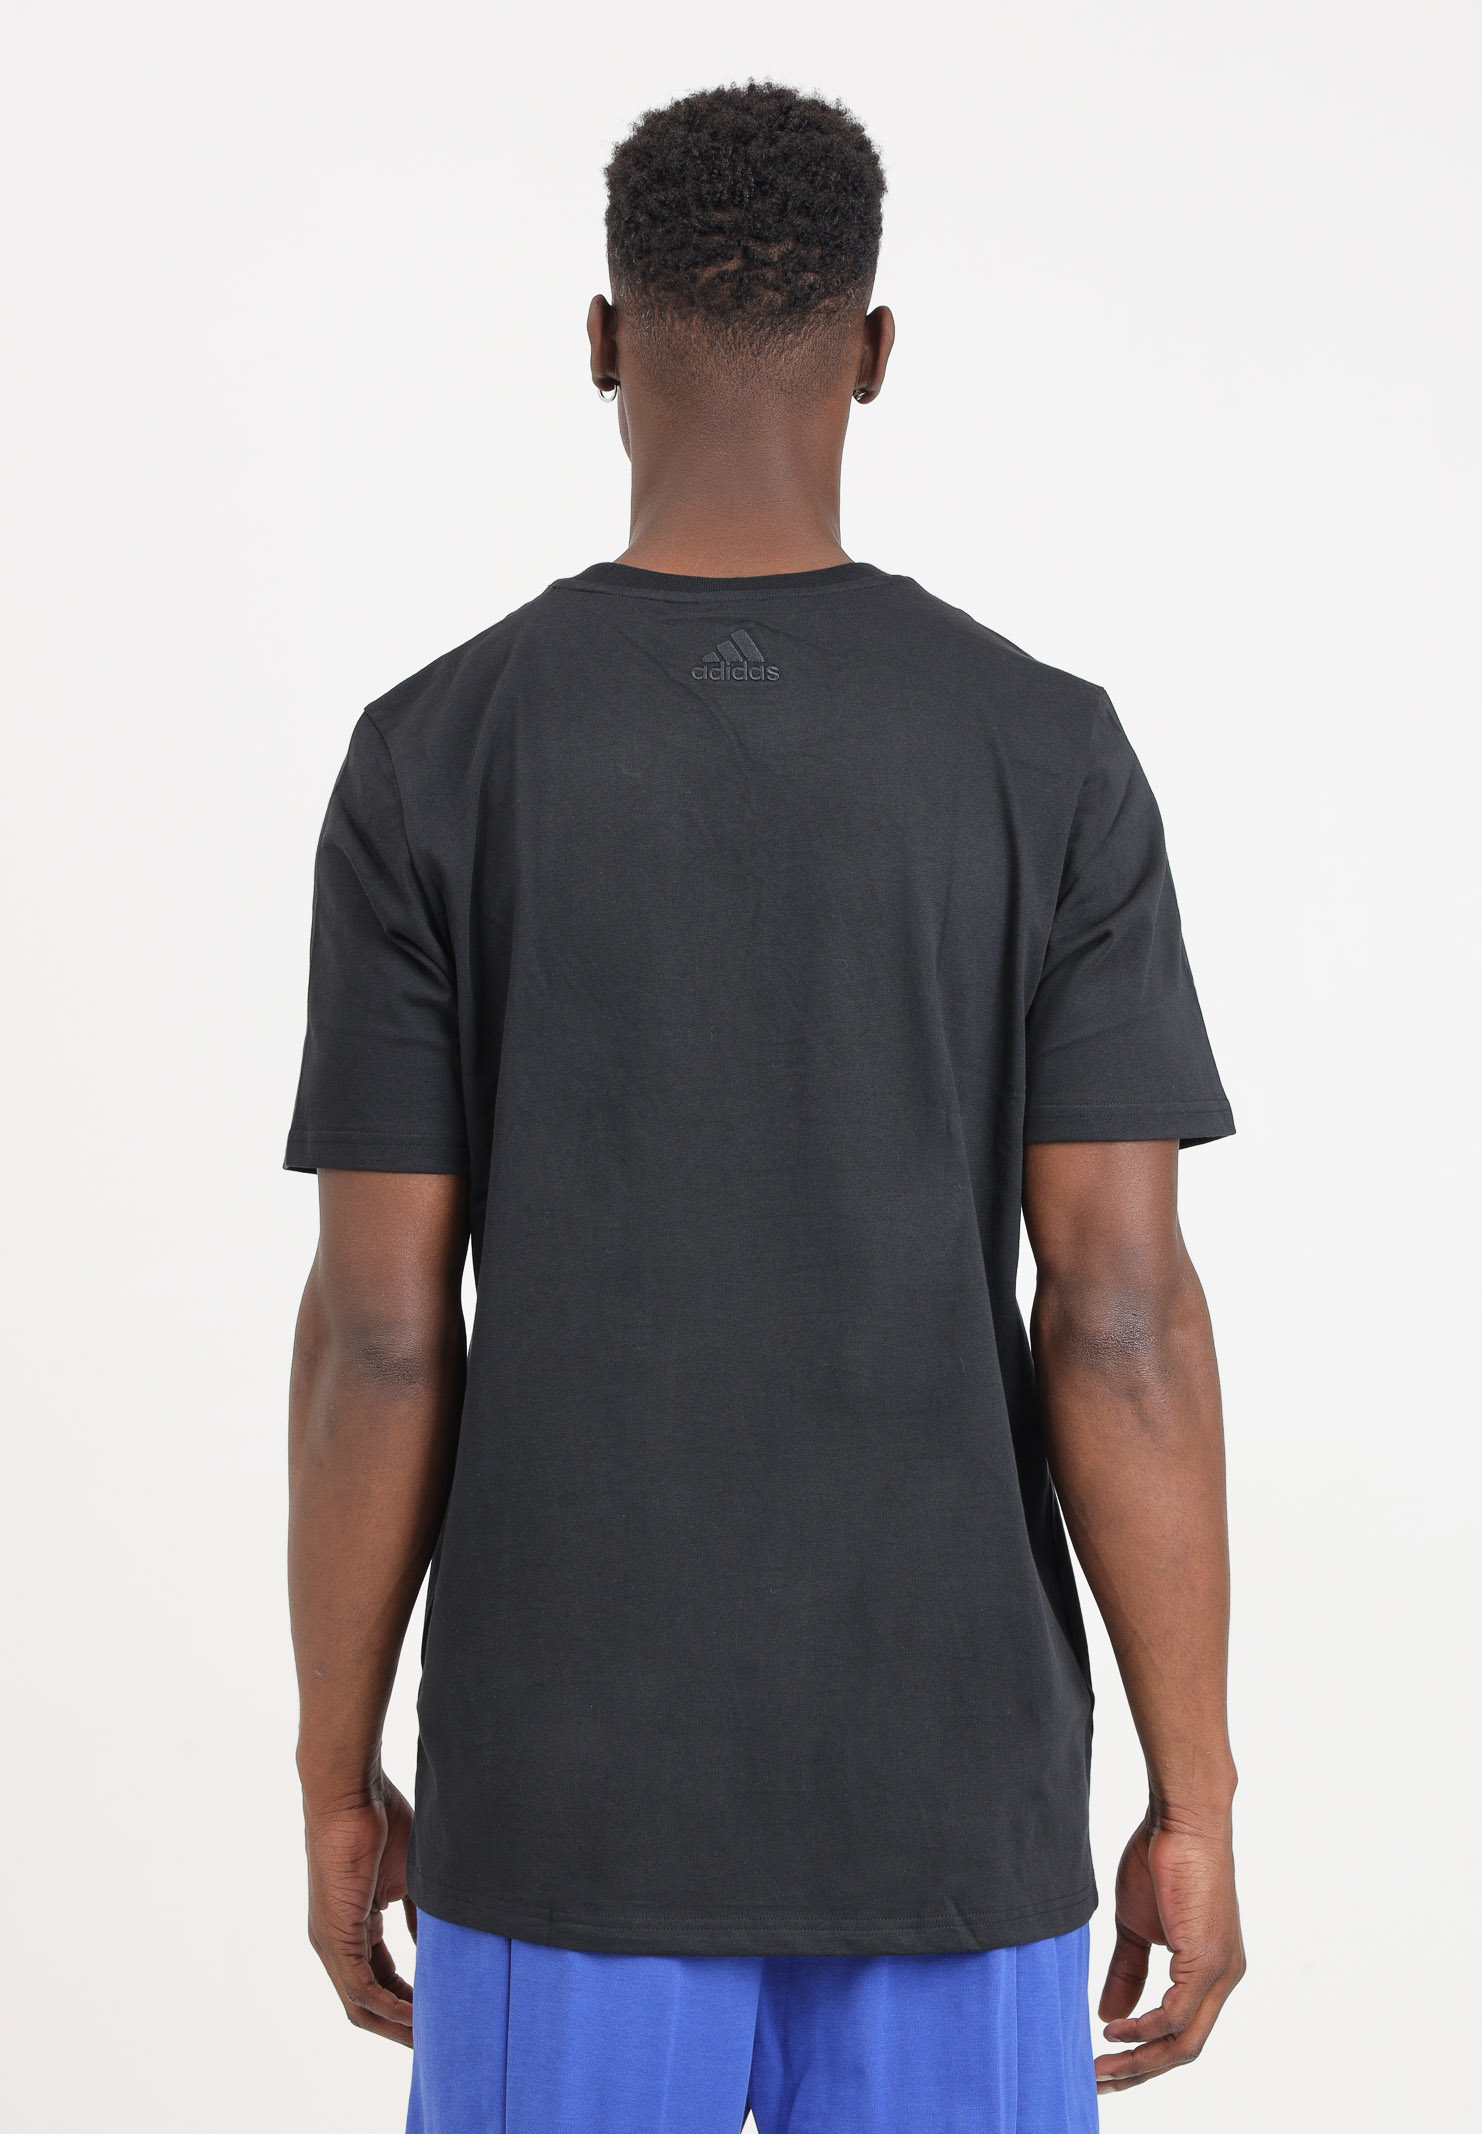 Essentials Single Jersey Big Logo men's black t-shirt model - ADIDAS  PERFORMANCE - Pavidas